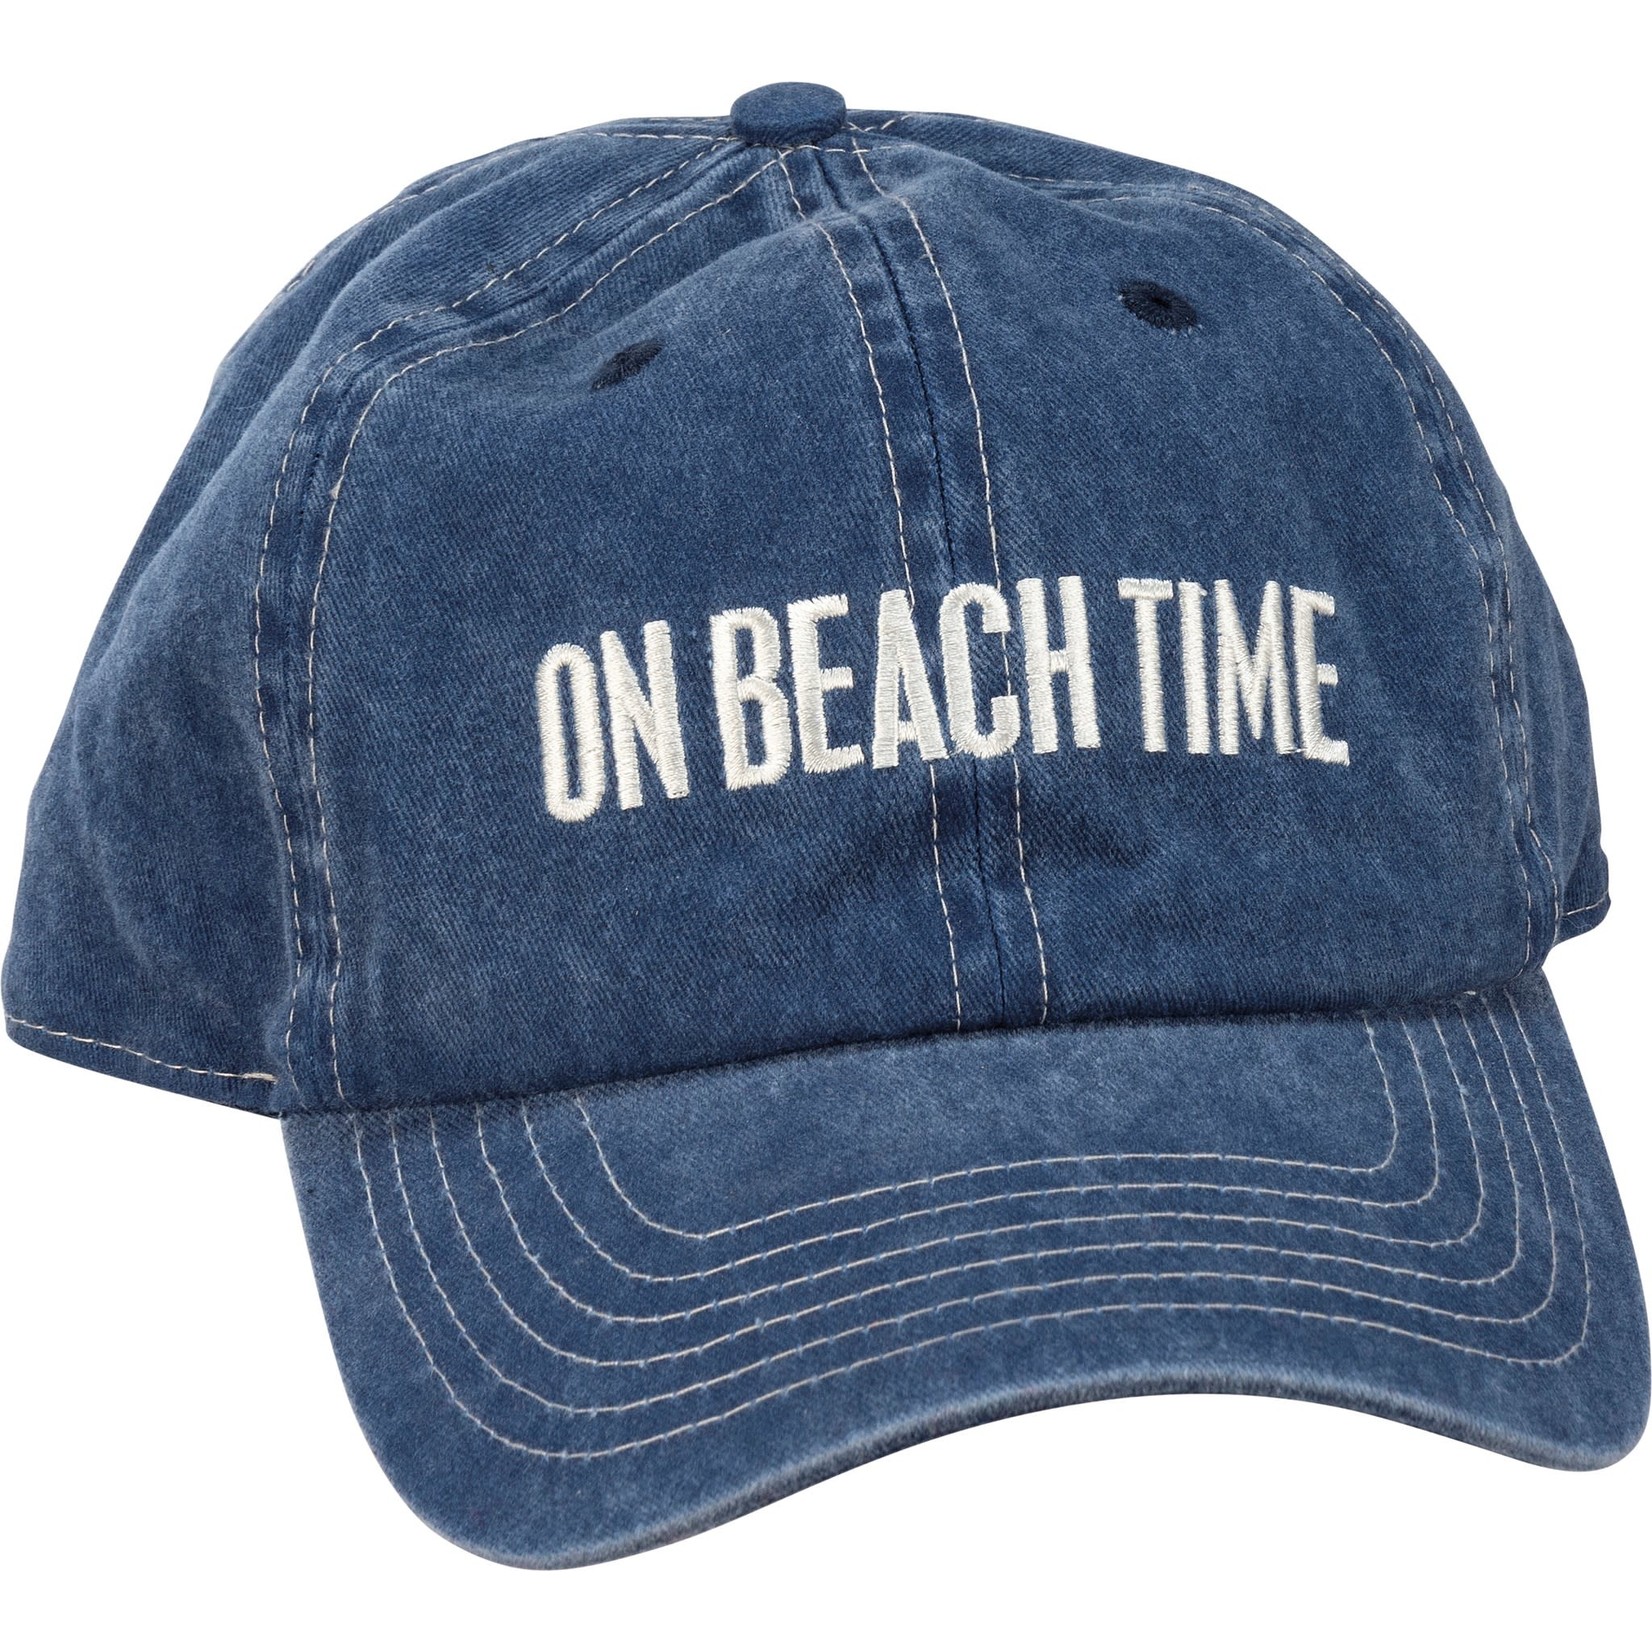 On Beach Time - Baseball Cap